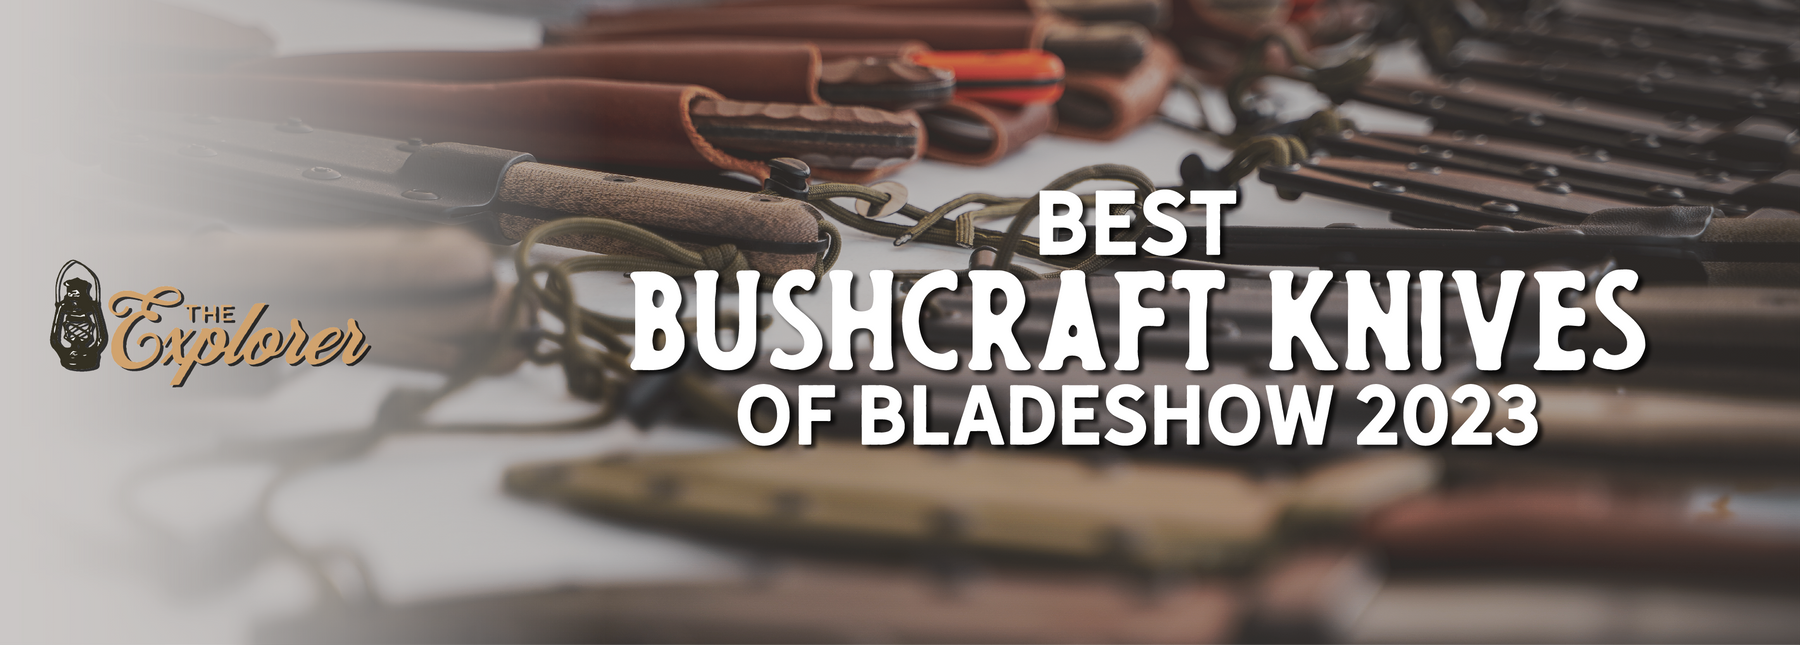 Best Bushcraft Knives of Blade Show 2023